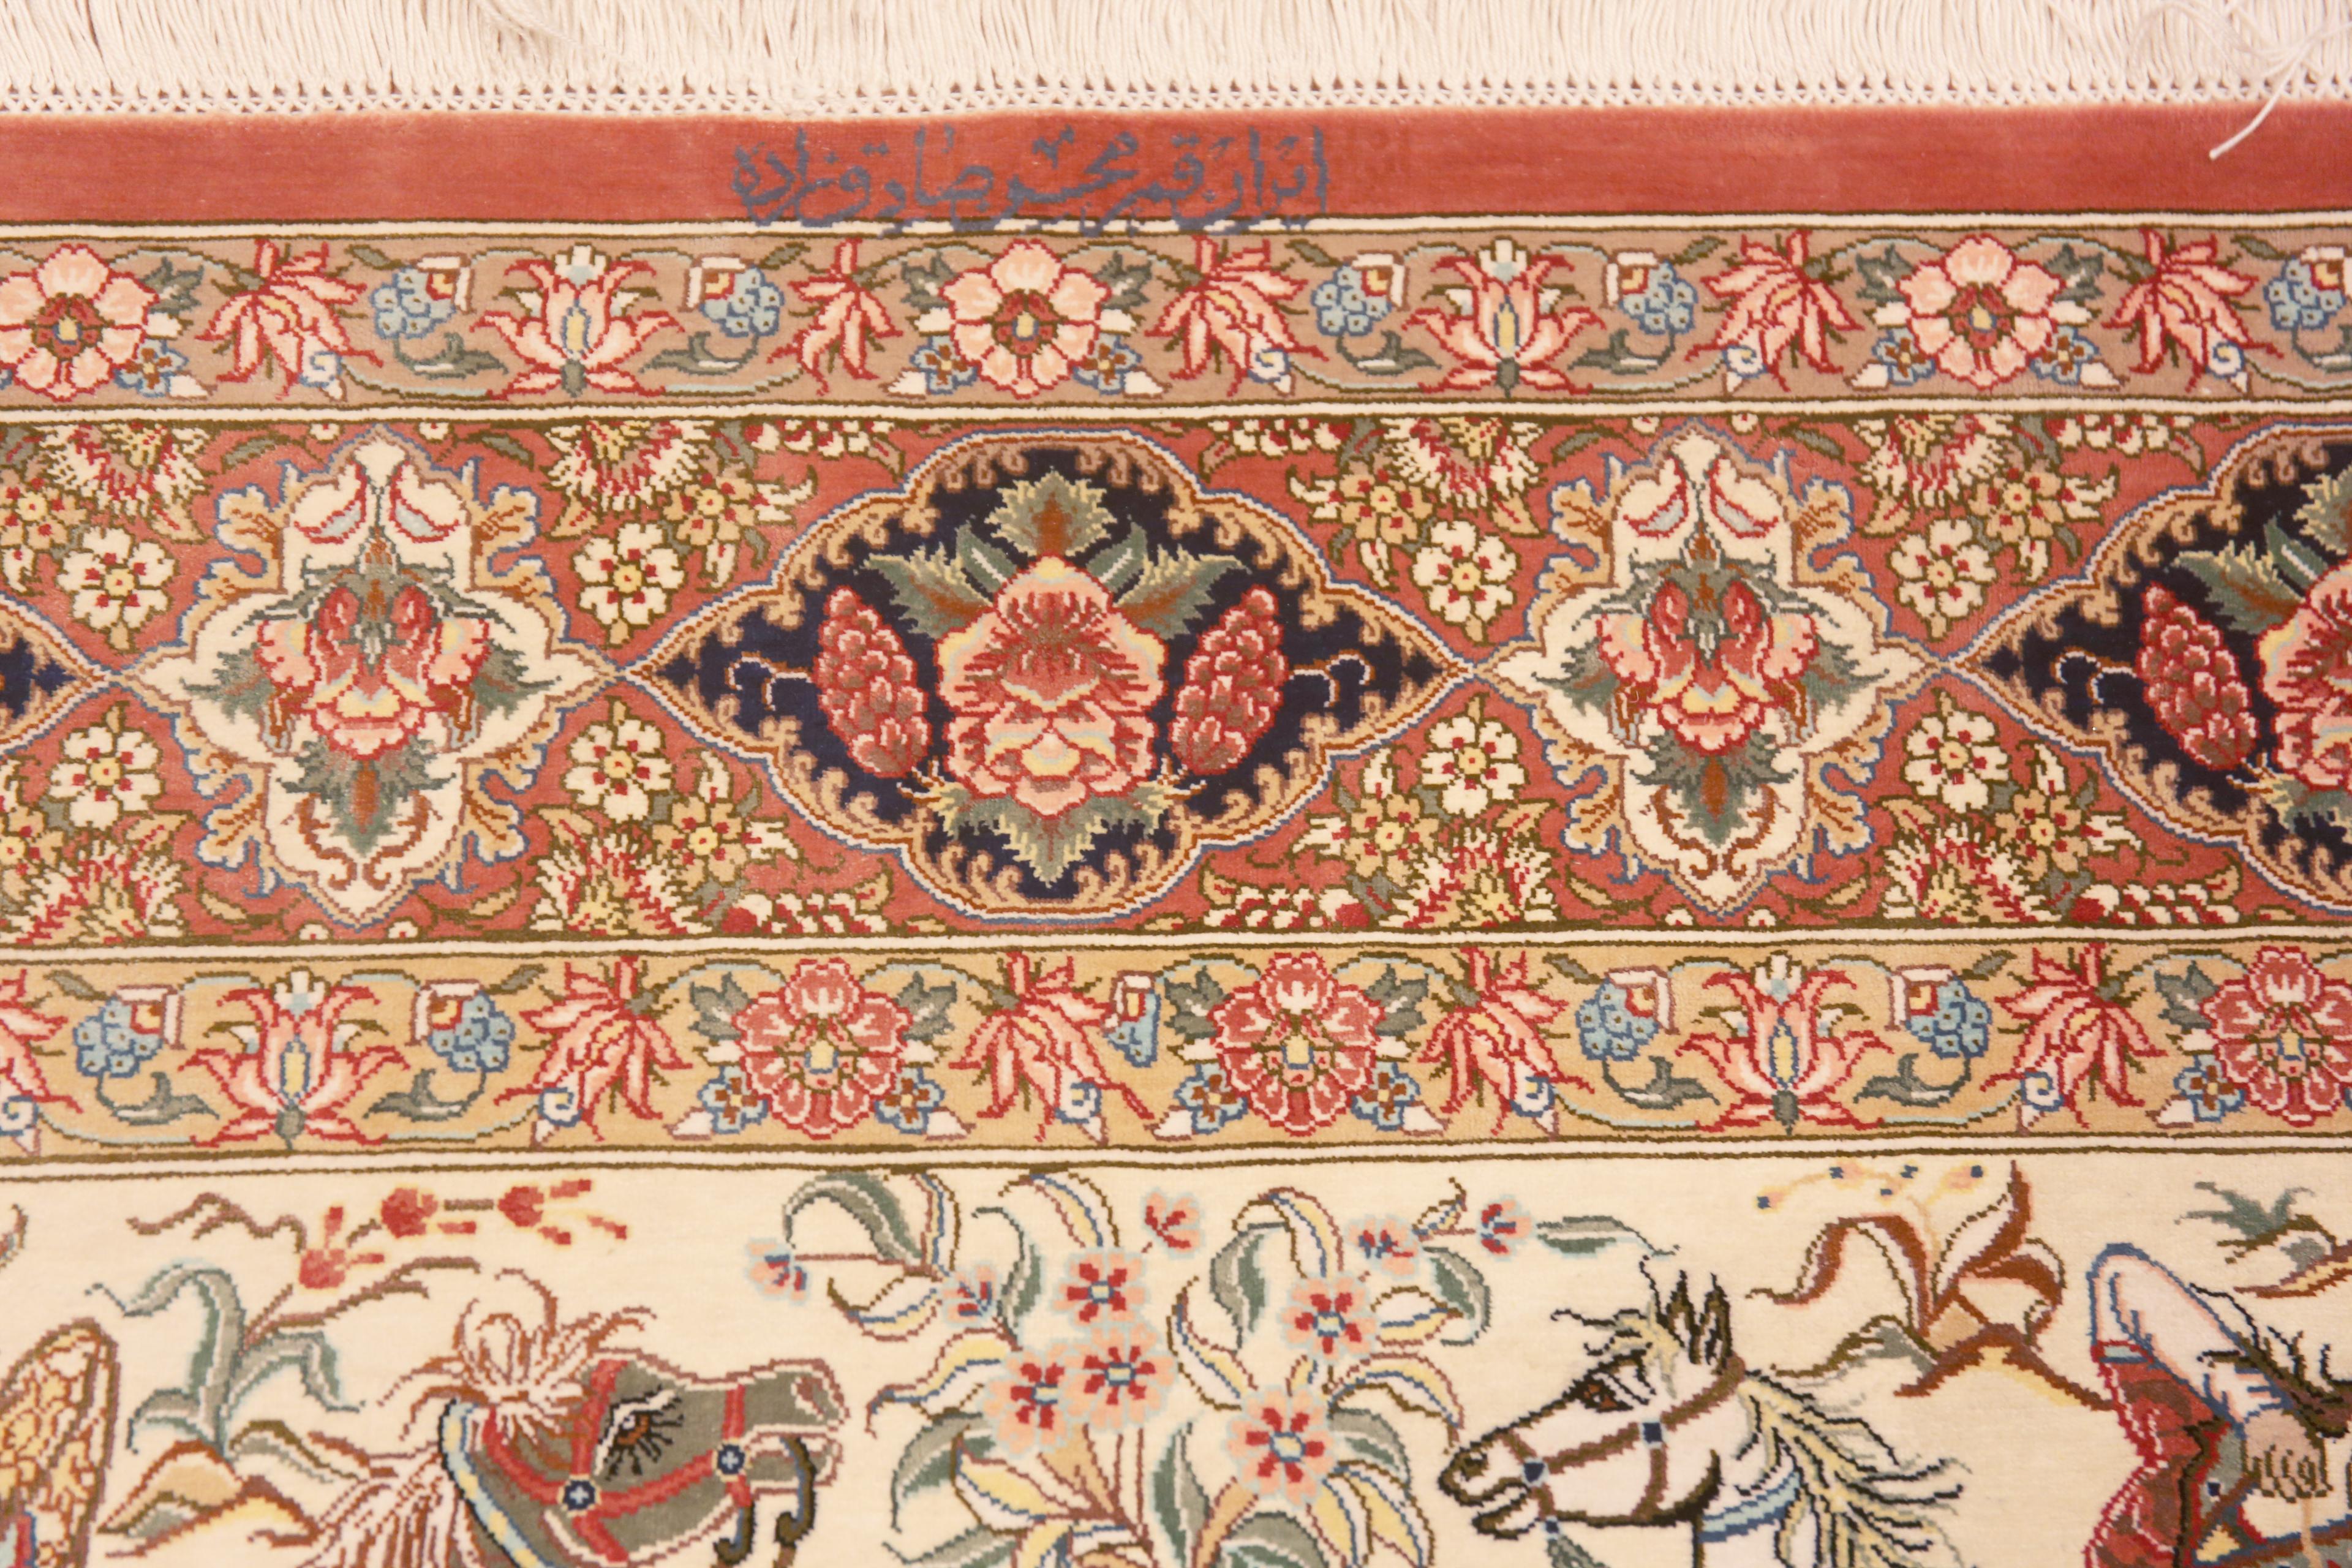 20th Century Small Artistic Pictorial Luxurious Vintage Persian Silk Qum Rug 3'3